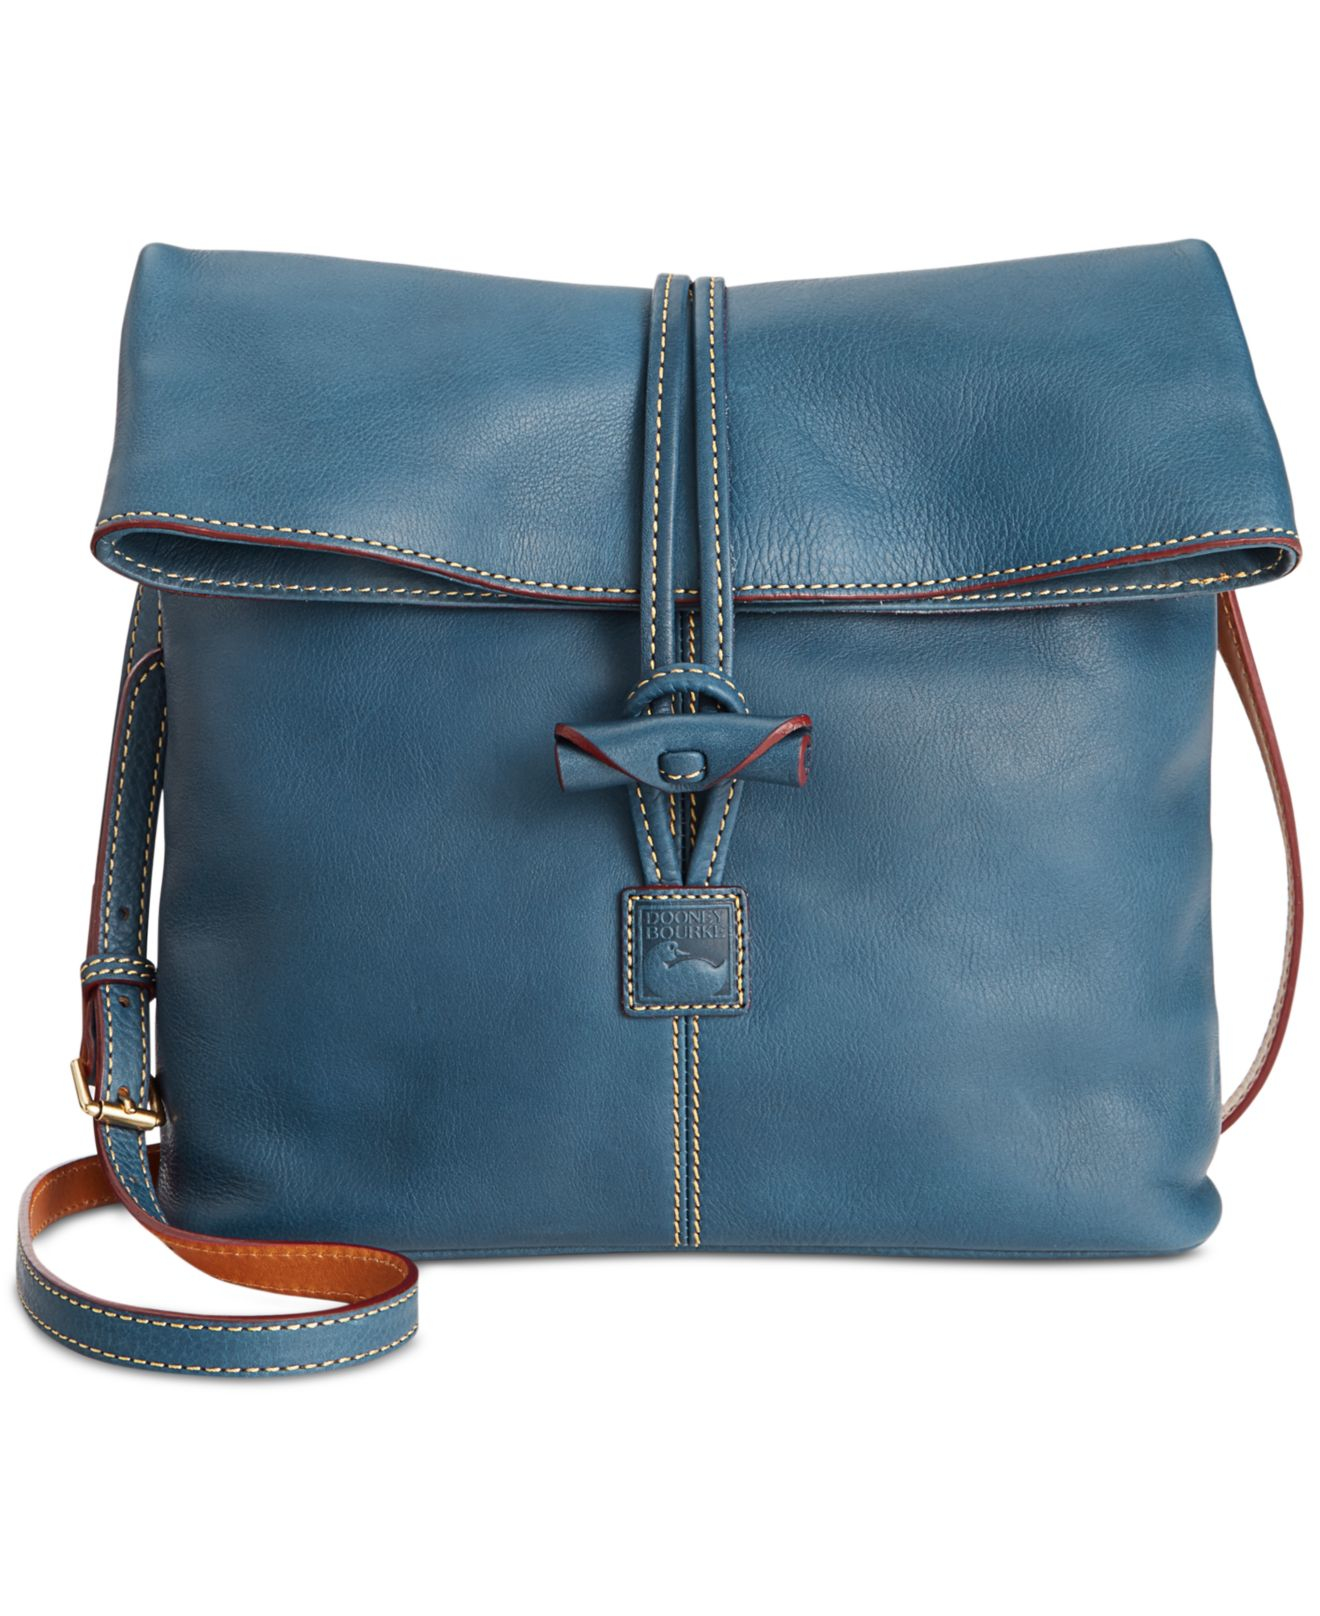 Dooney & Bourke Florentine Medium Toggle Crossbody Bag in Blue